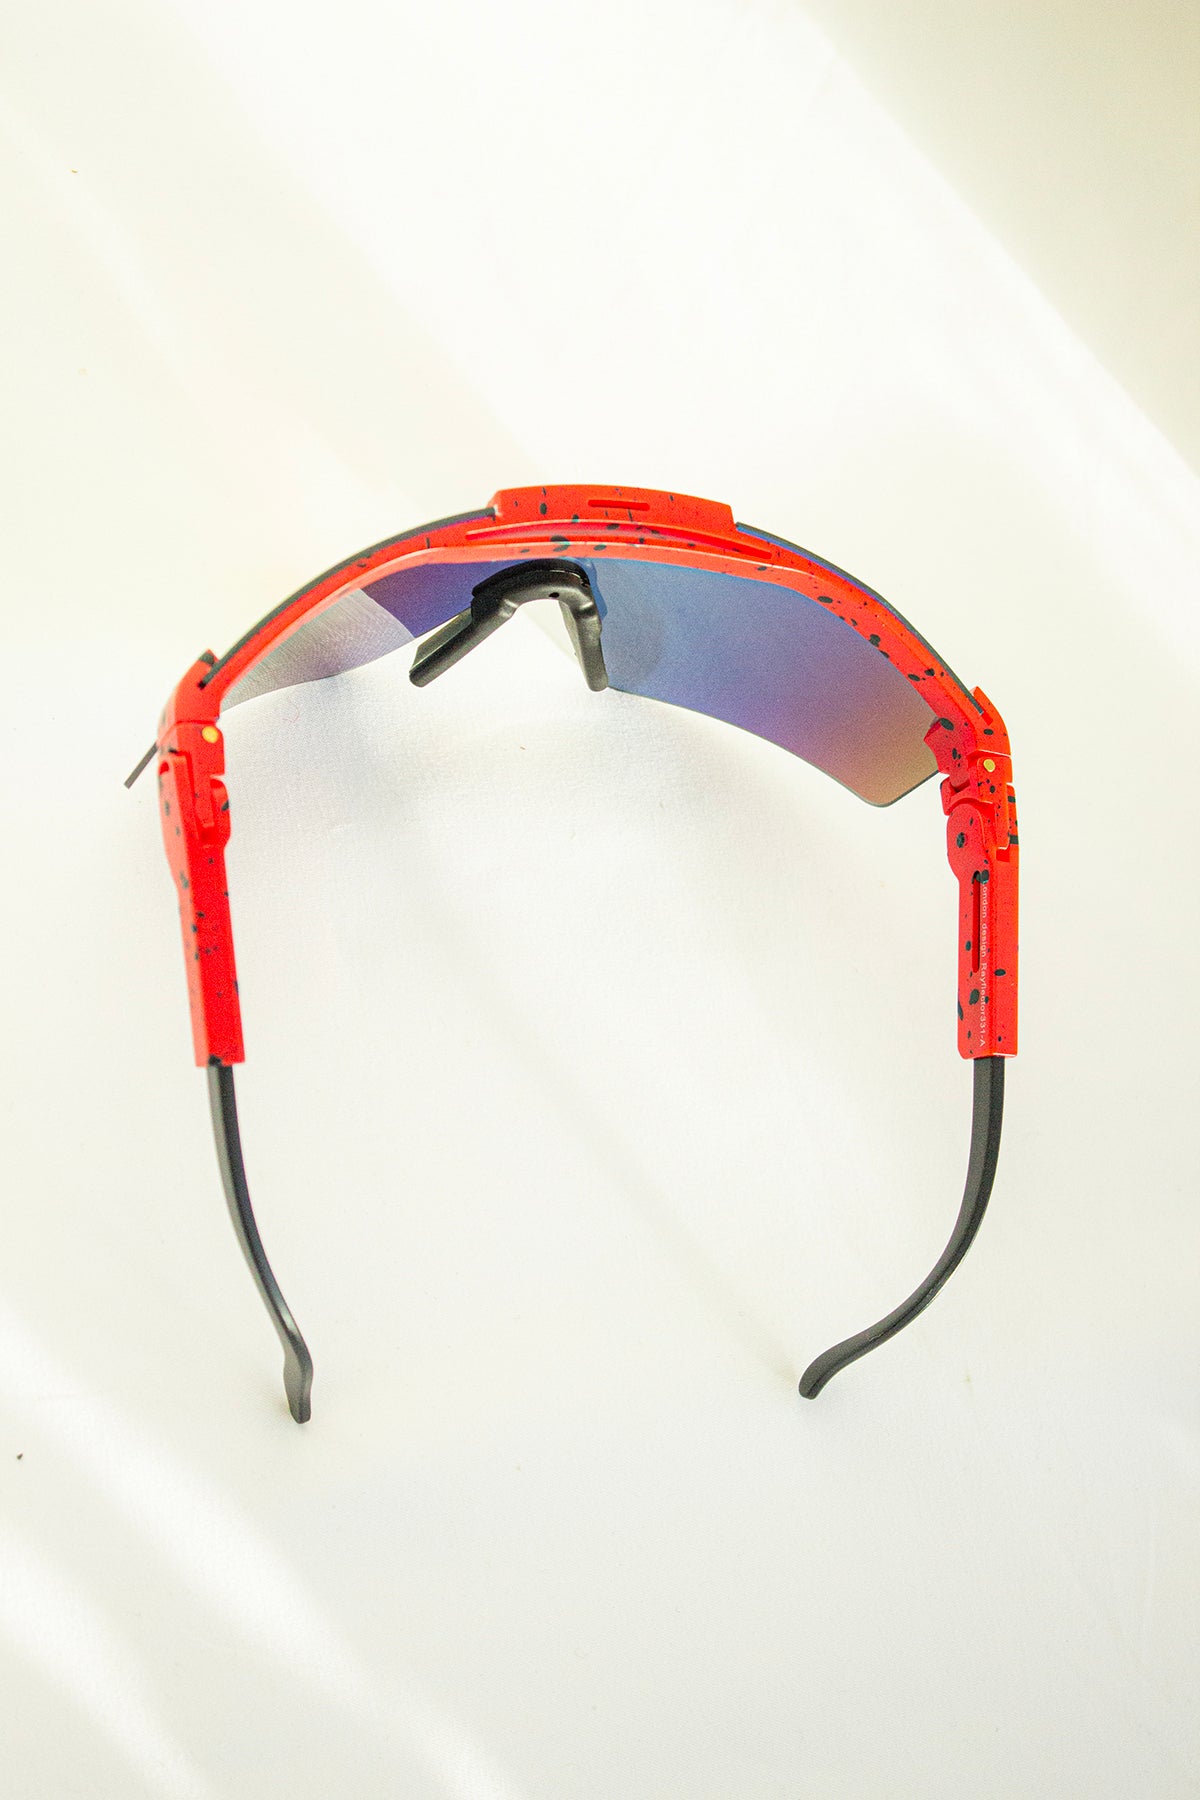 Mirrored Oversize Ski Style Visor Sunglasses - Sugar + Style